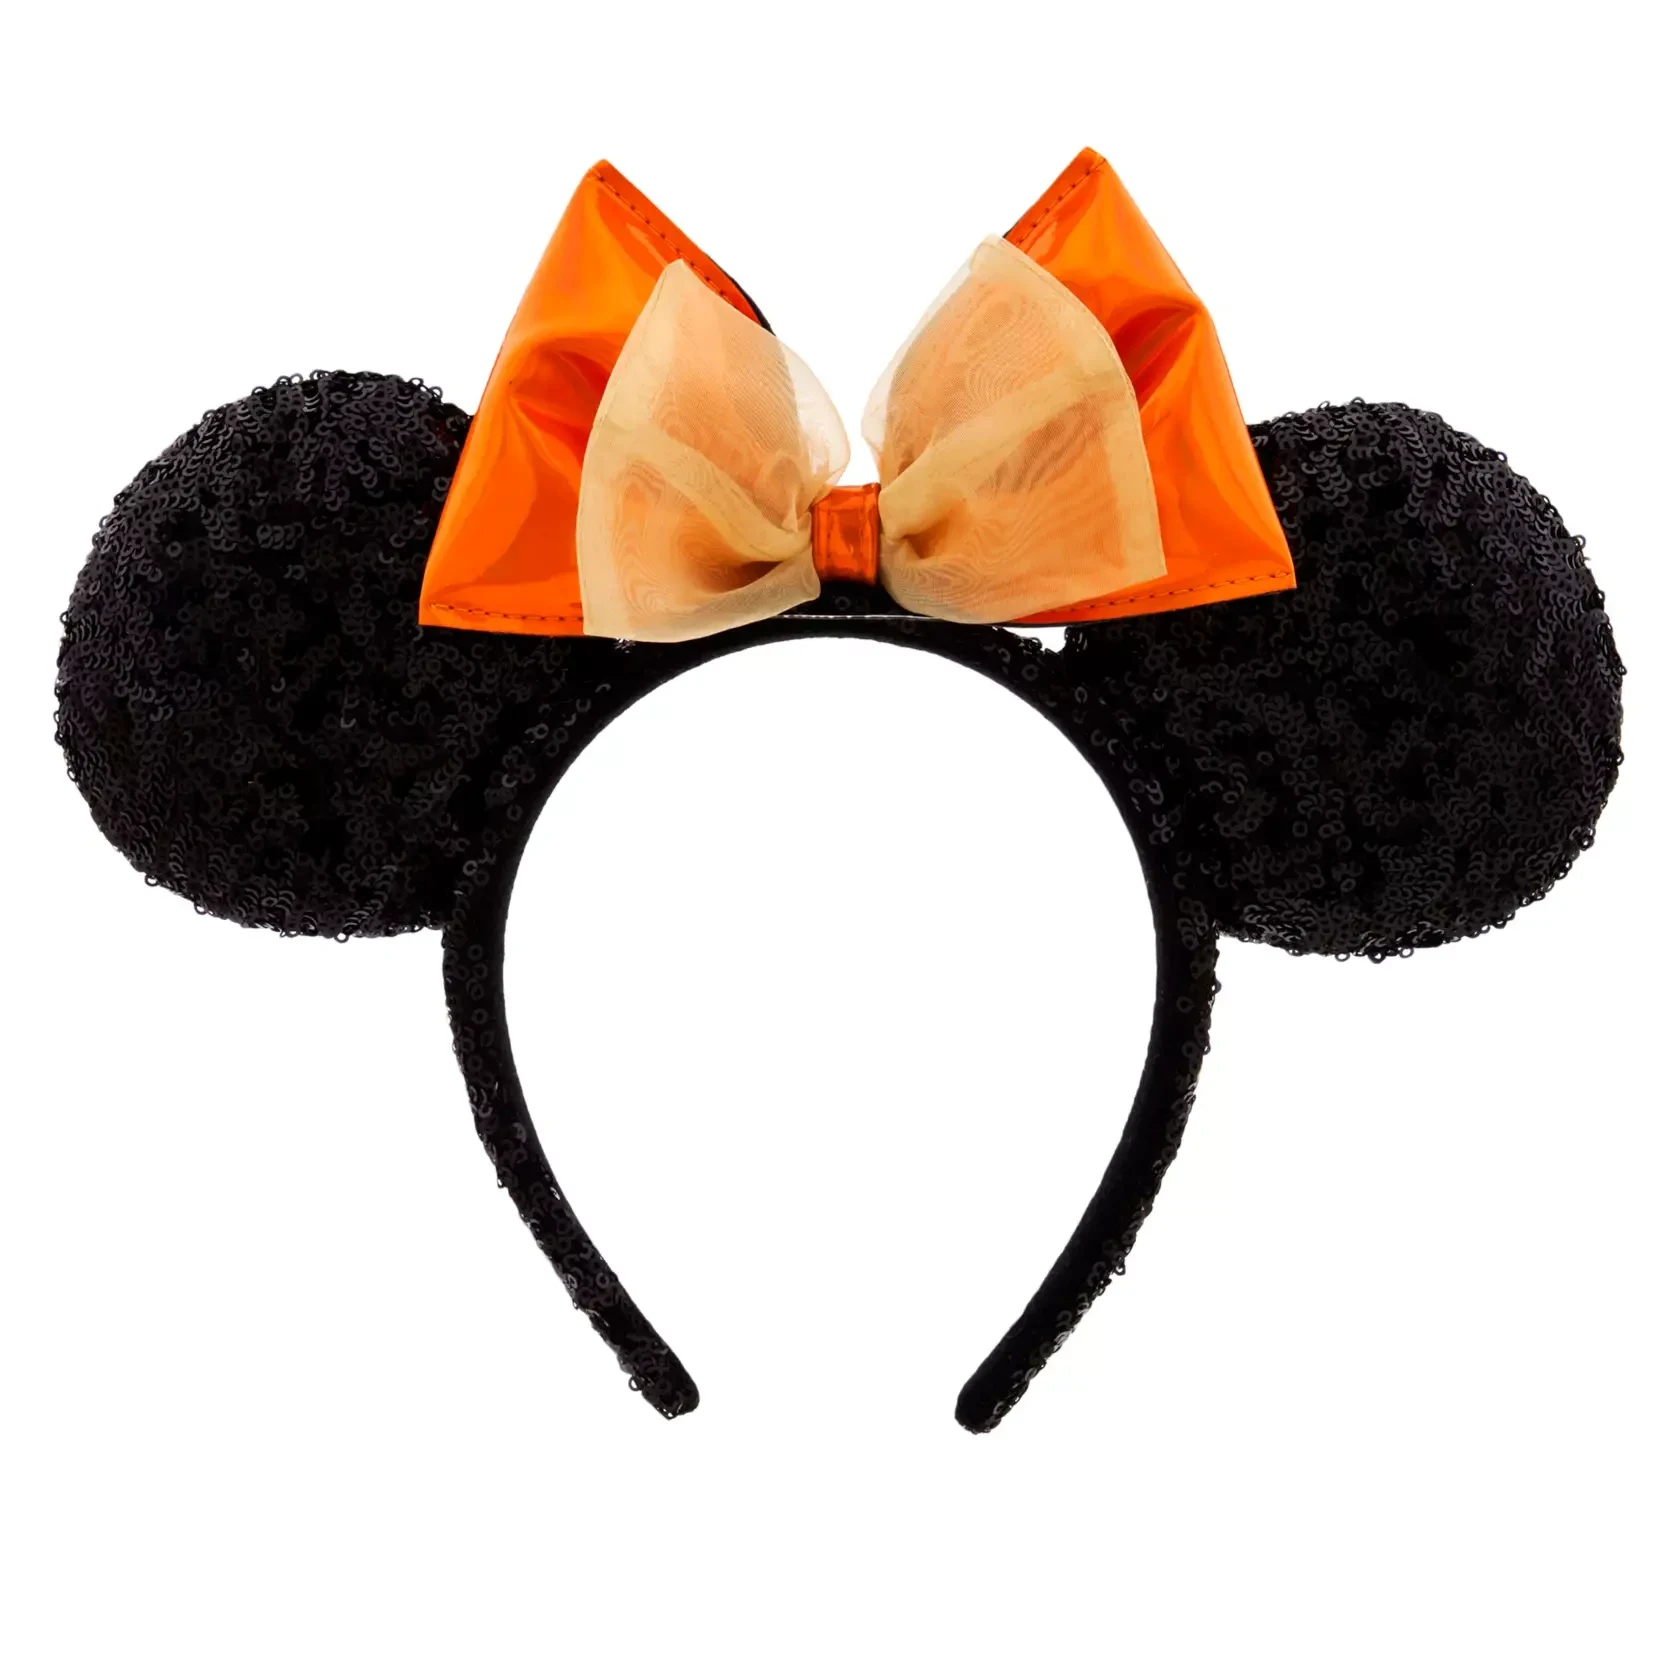 item Disney Parks - Minnie Mouse Ears Headband -Orange Bow 4503105485902fmtwebpqlt70wid1680h